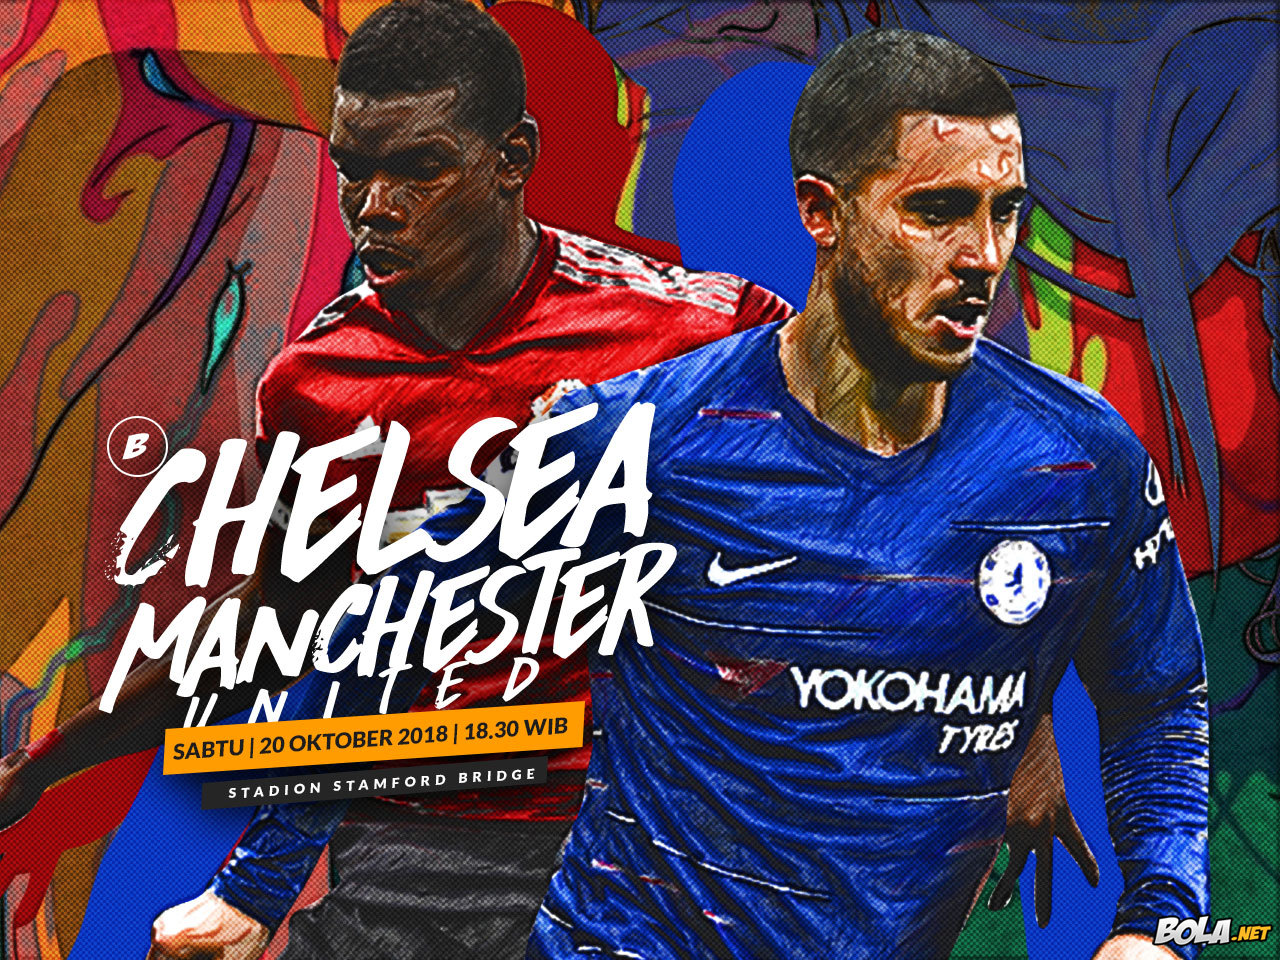 Deskripsi : Wallpaper Chelsea Vs Manchester United, size: 1280x960